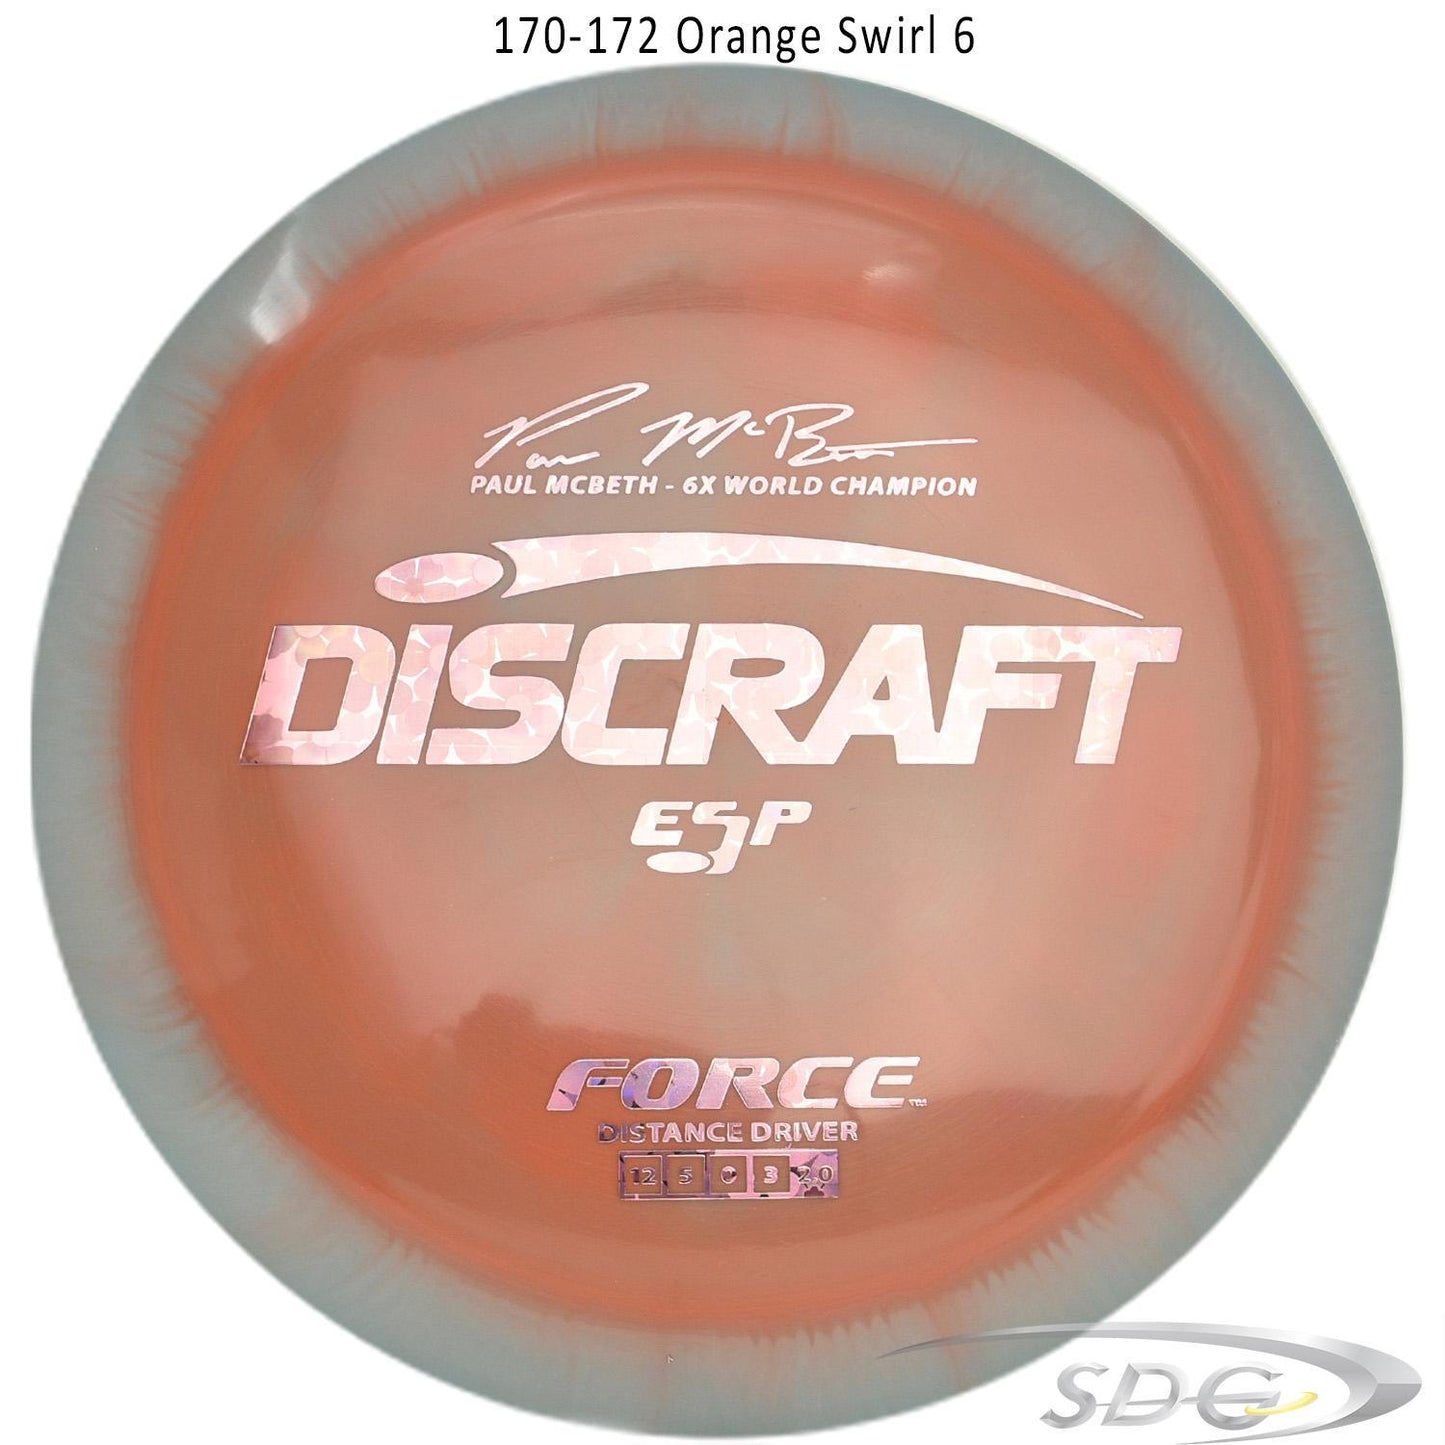 discraft-esp-force-6x-paul-mcbeth-signature-disc-golf-distance-driver 170-172 Orange Swirl 6 